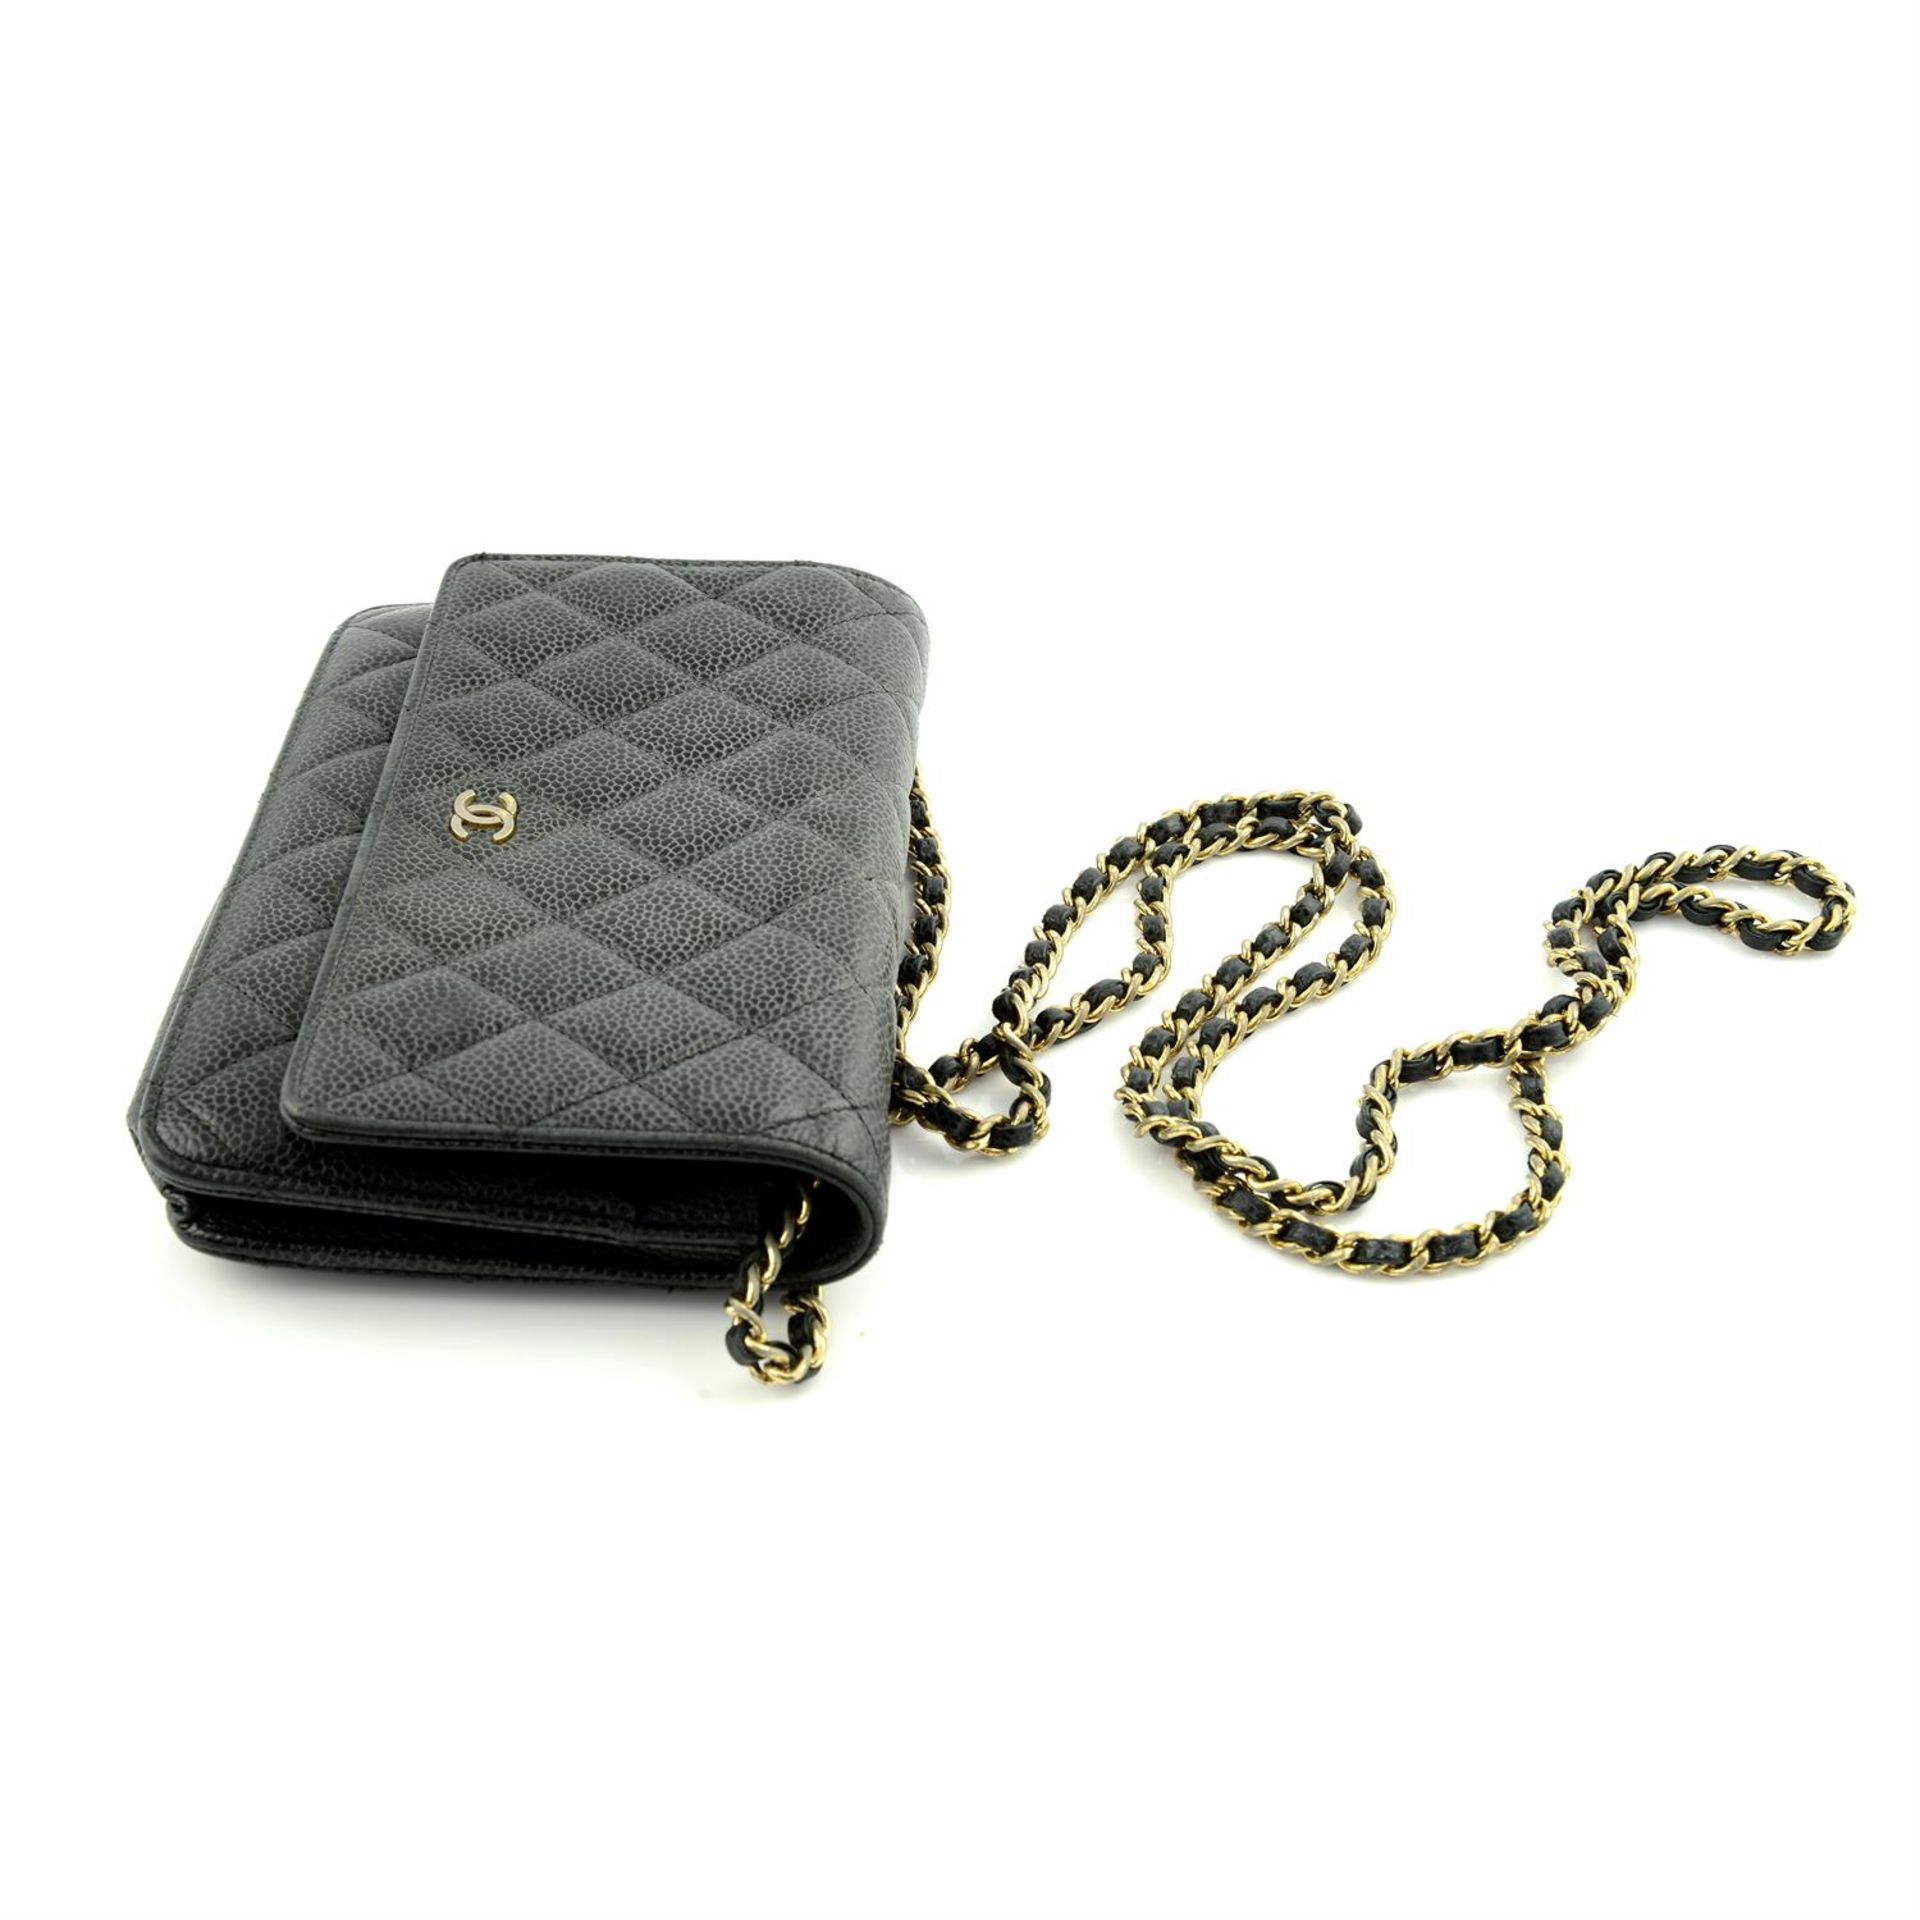 CHANEL - a black Caviar wallet on chain handbag. - Image 3 of 6